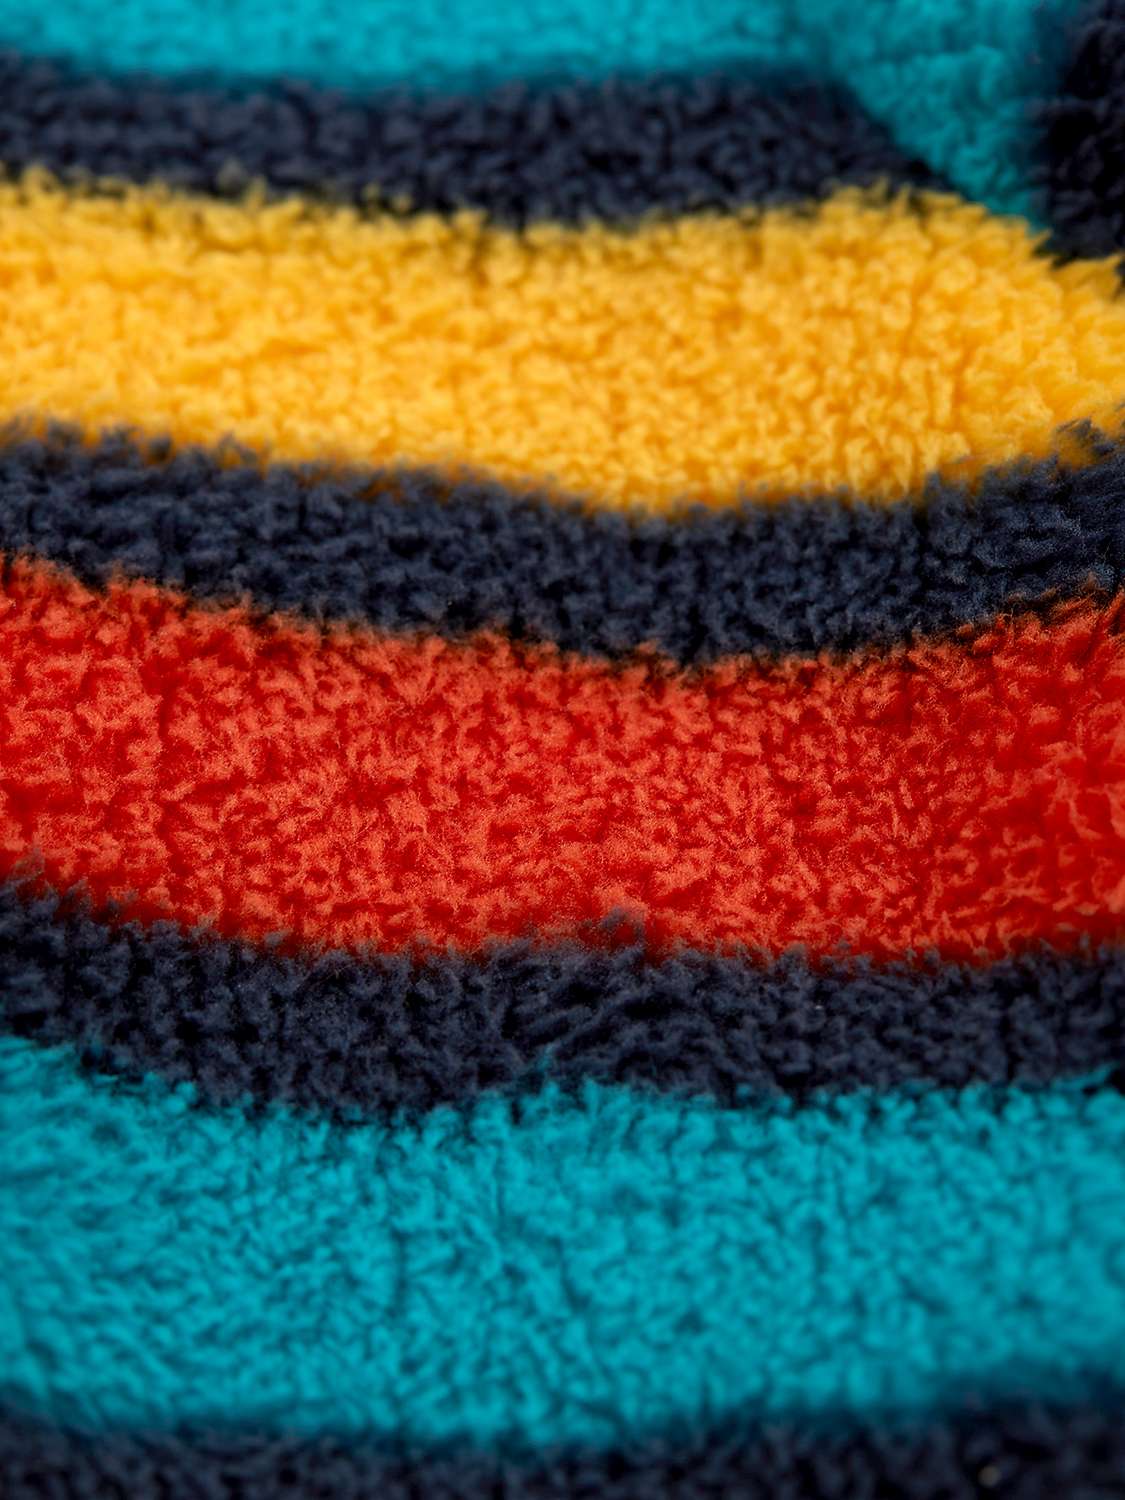 Buy Frugi Kids' Toasty Ted Camper Rainbow Stripe Fleece Jacket, Multi Online at johnlewis.com